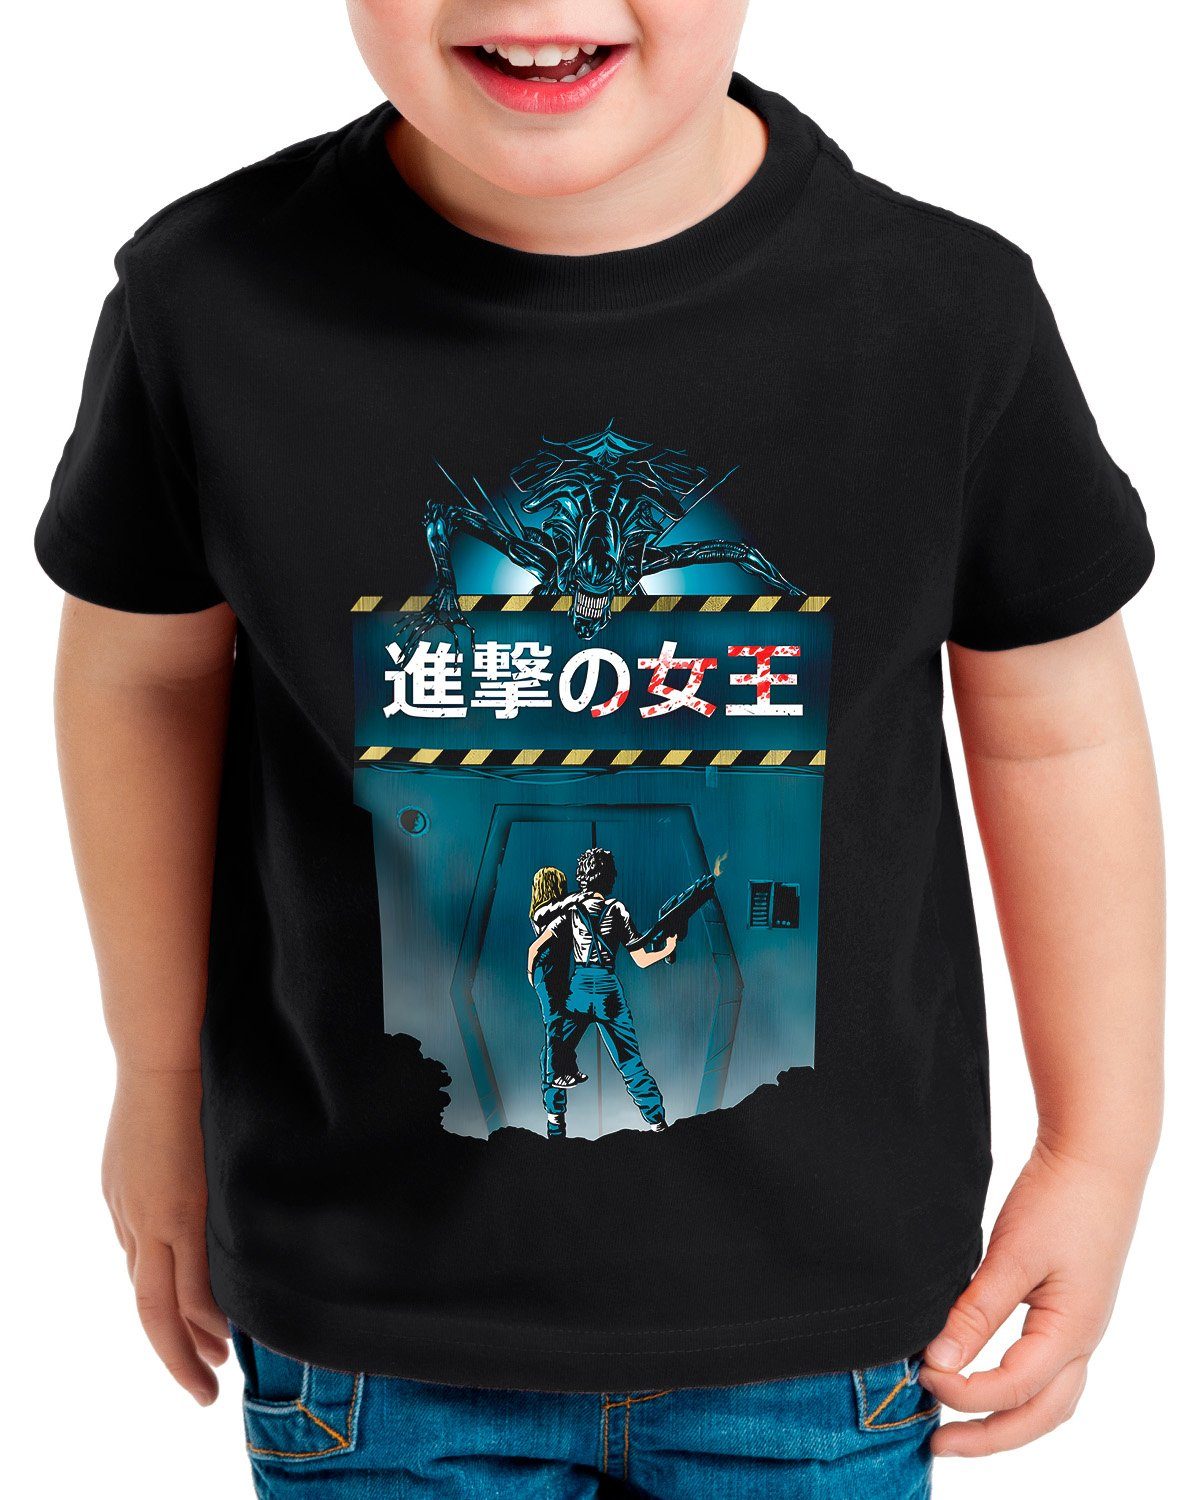 style3 Print-Shirt Kinder T-Shirt Attack ridley scott Queen predator xenomorph alien